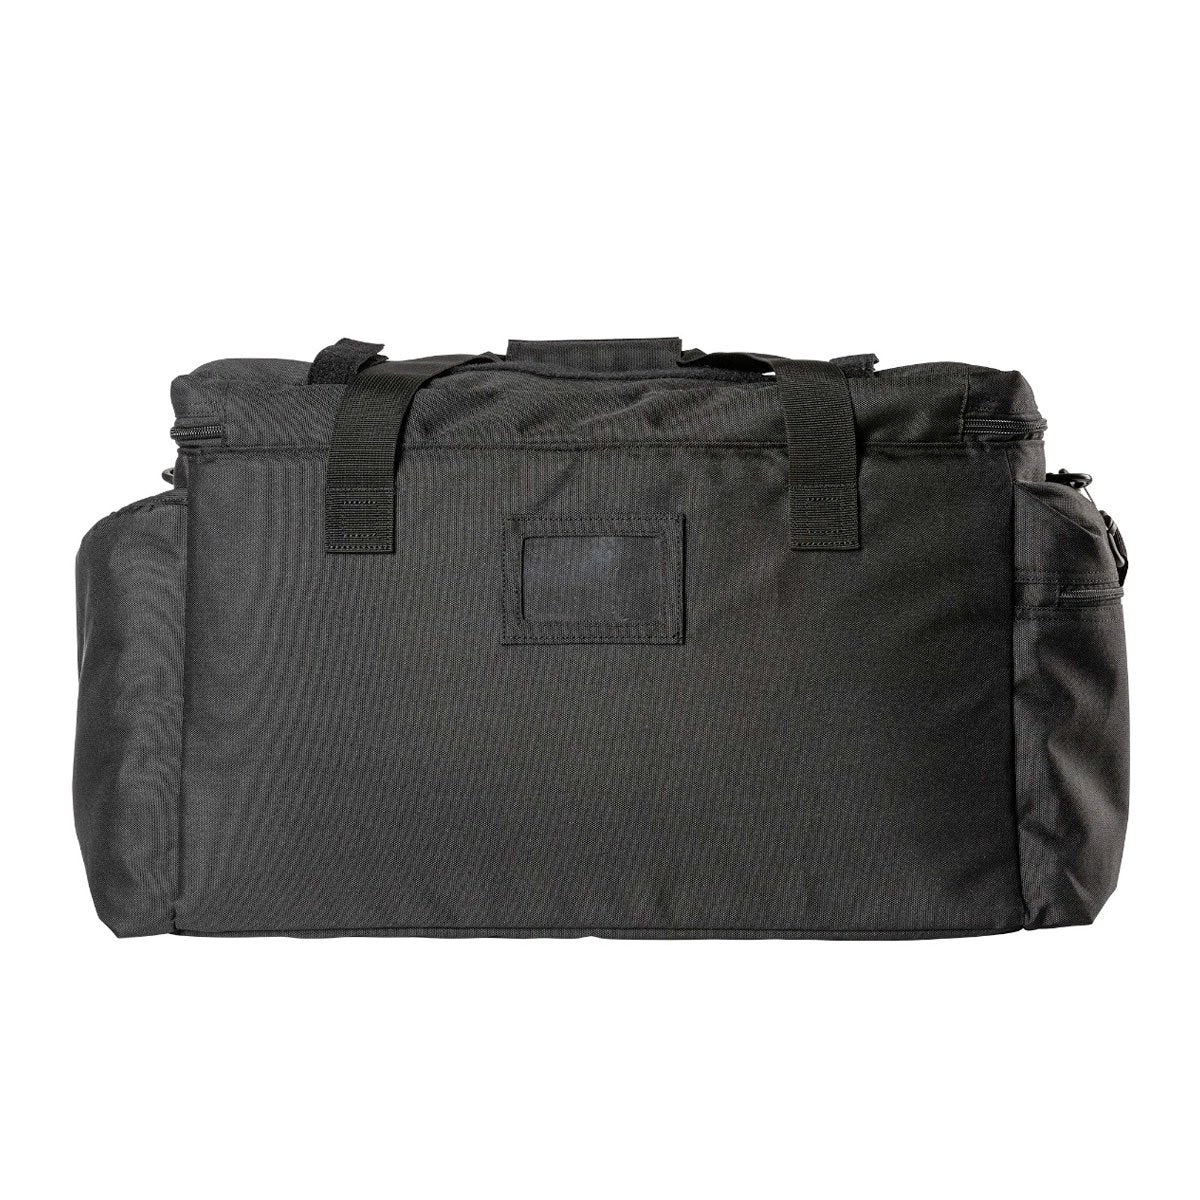 5.11 Tactical Basic Patrol Bag 37L Bags, Packs and Cases 5.11 Tactical Tactical Gear Supplier Tactical Distributors Australia